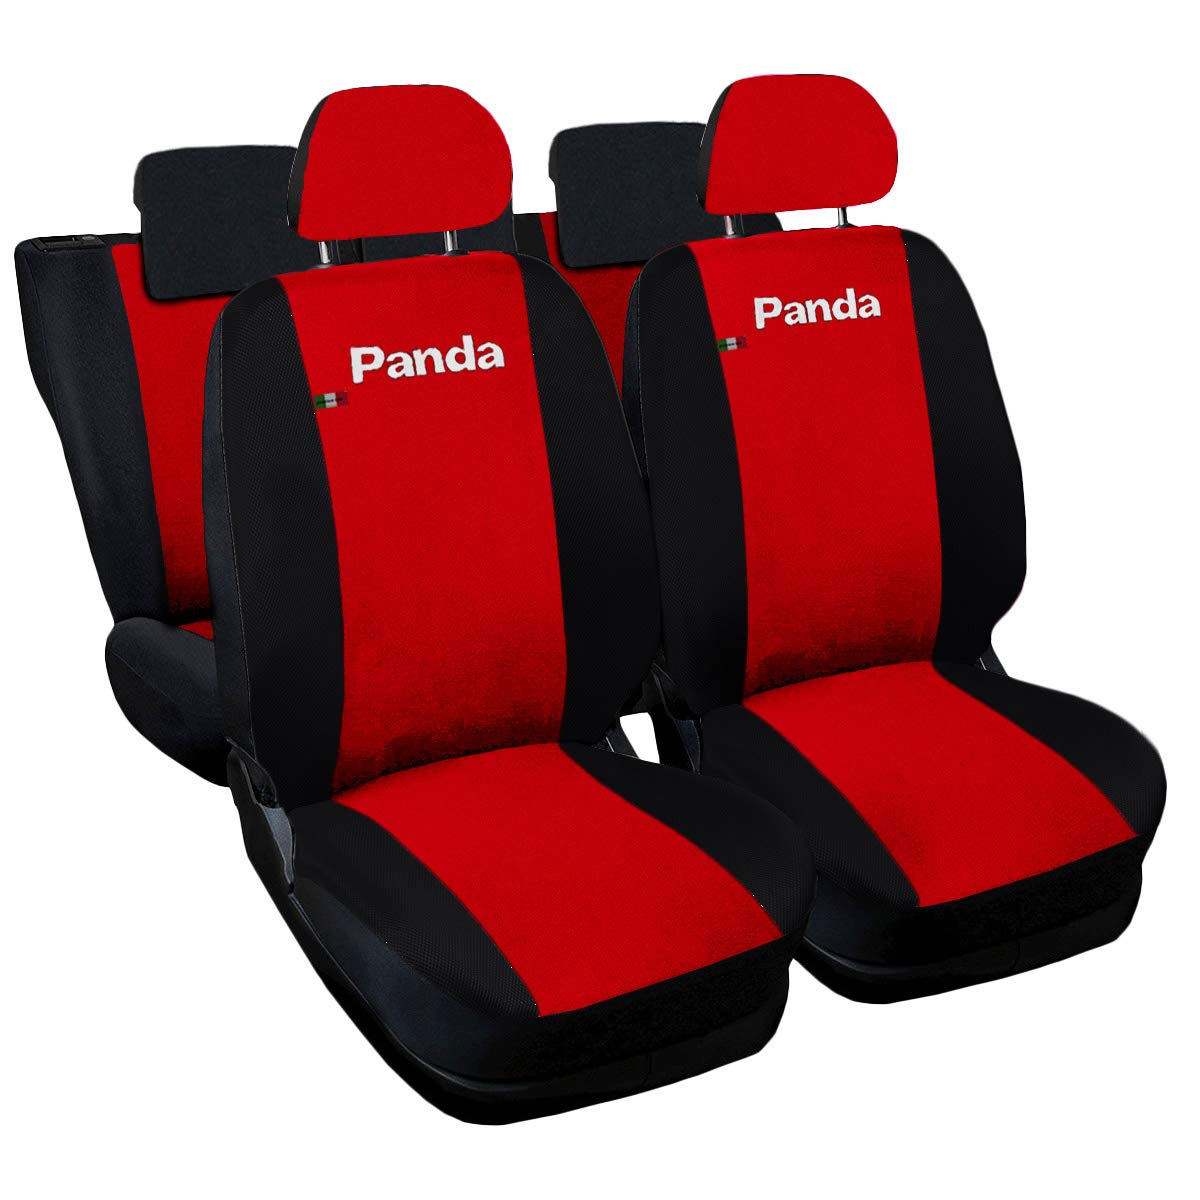 Lupex Shop Panda.014b.Rs-1-3 New Panda Sitzbezüge - rot schwarz 1-3 von Lupex Shop